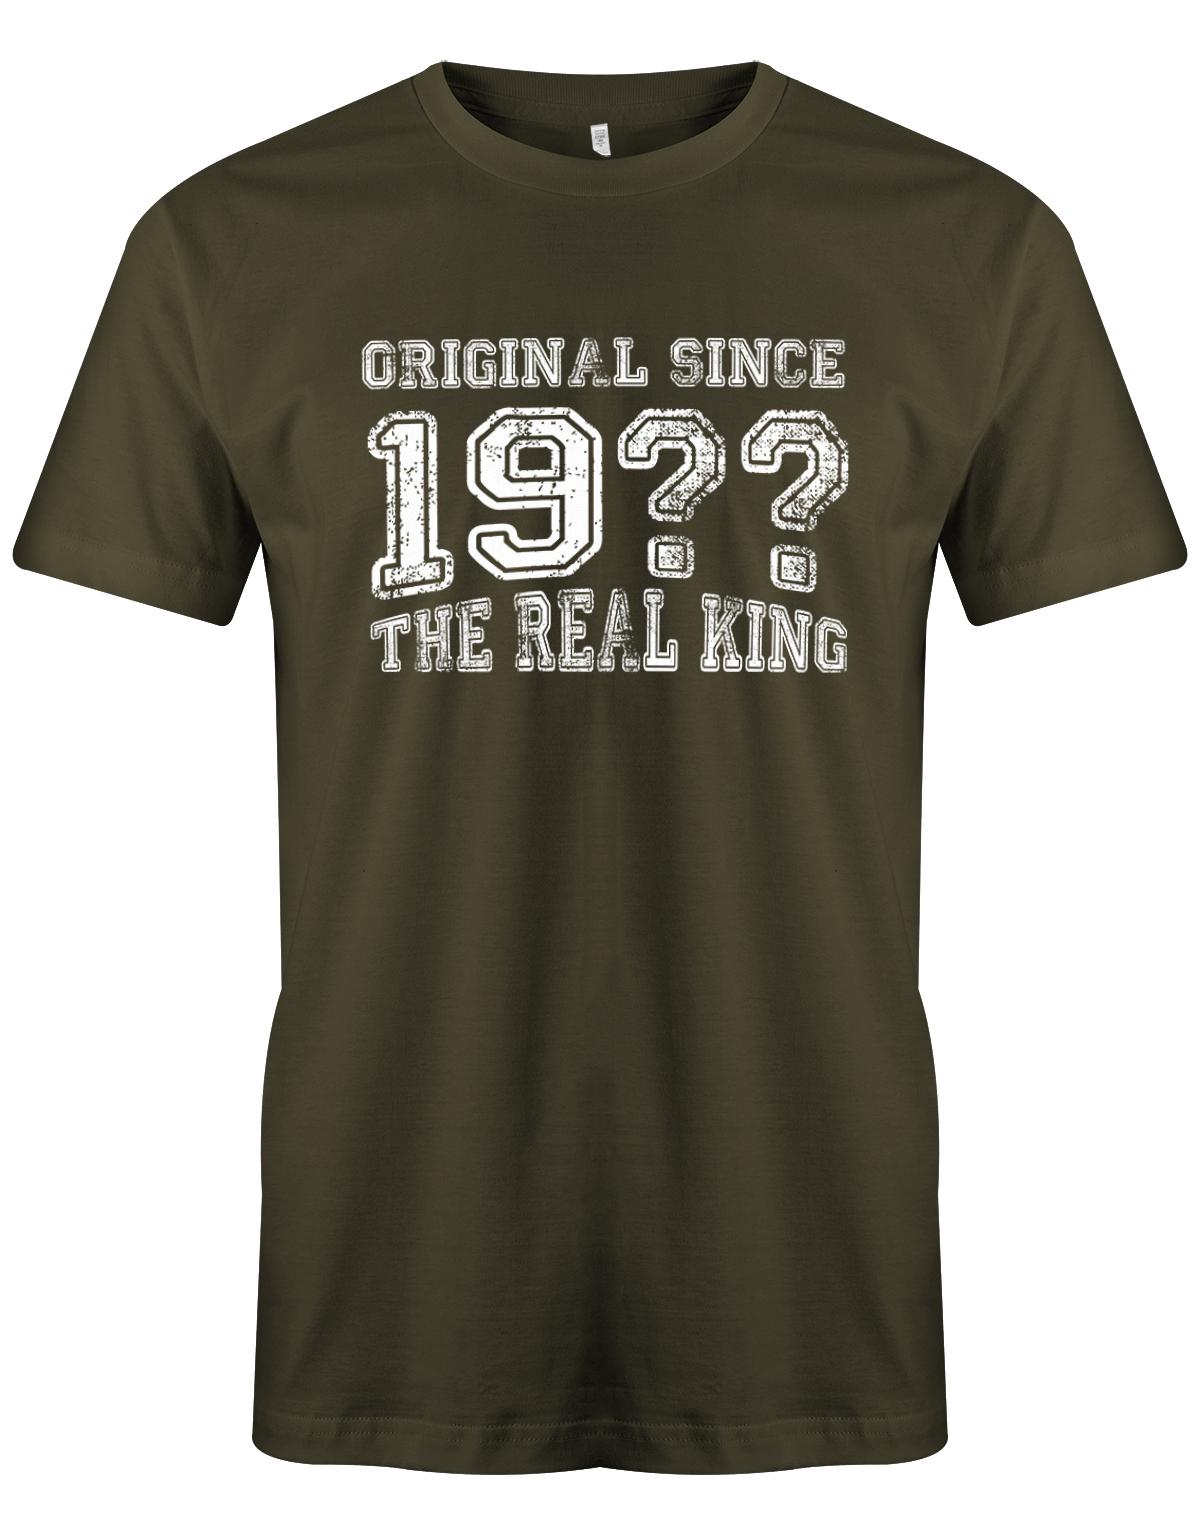 Original-Since-The-Real-King-Herren-Shirt-Army